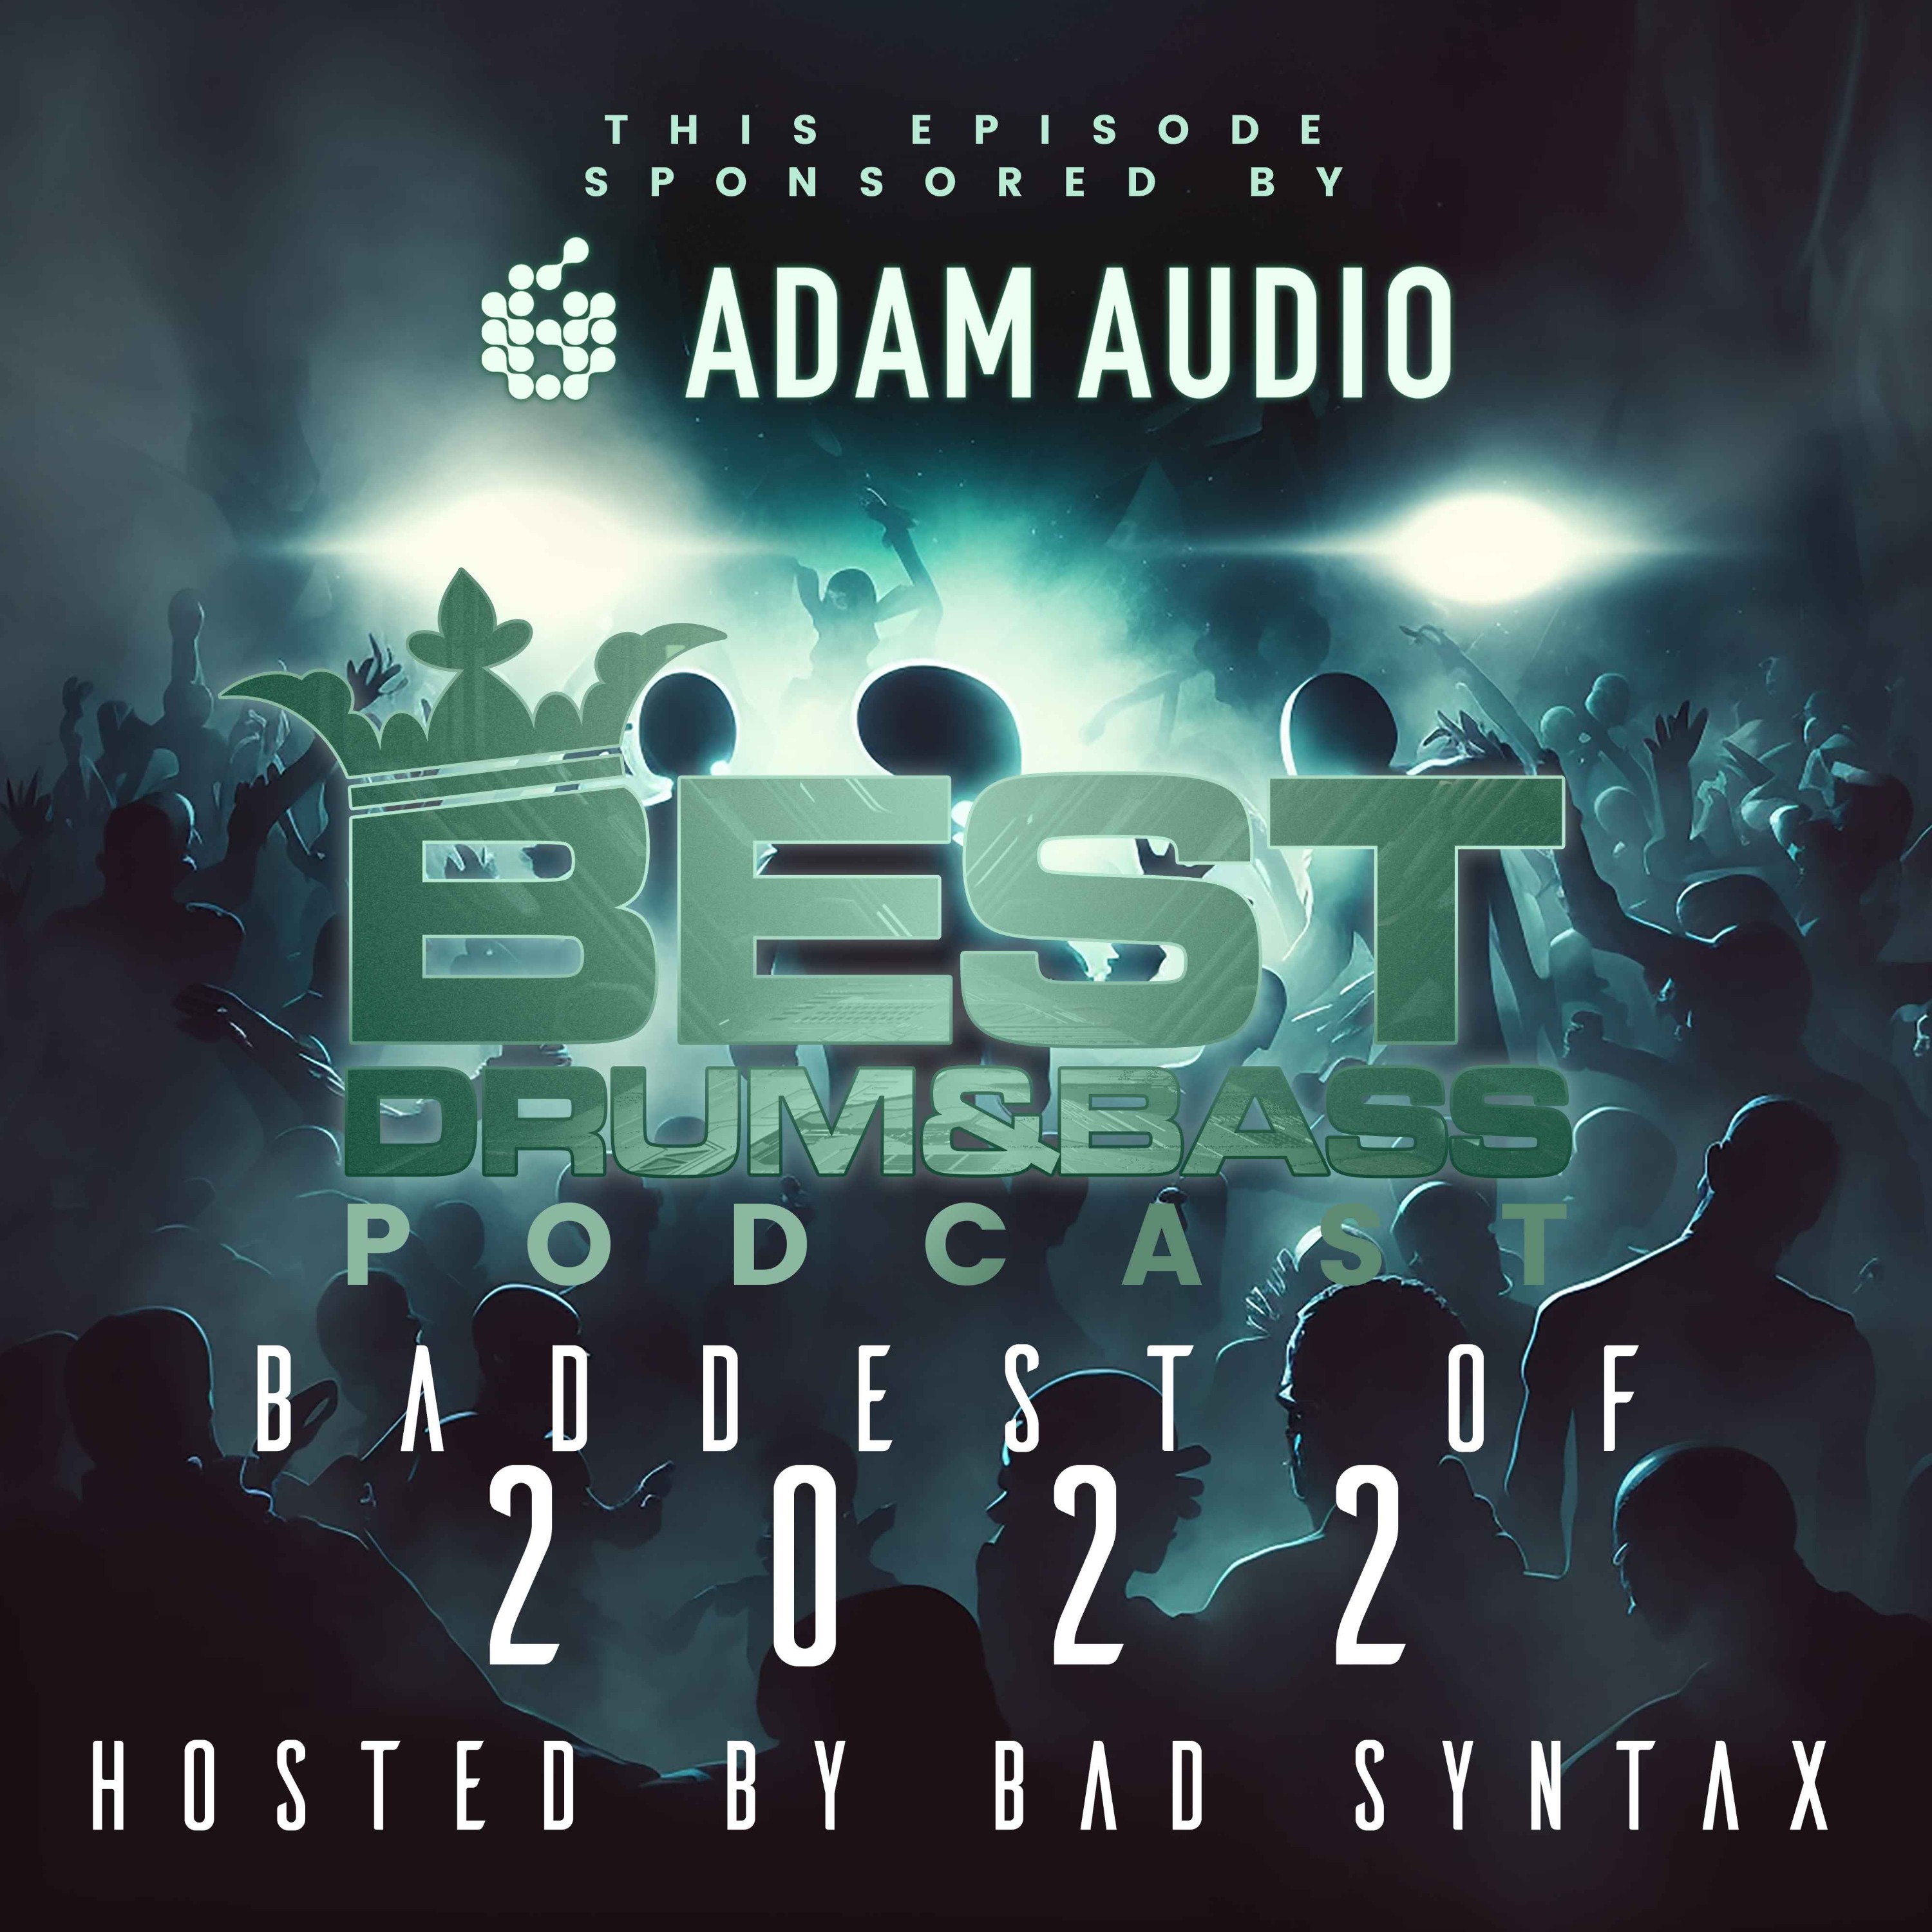 Podcast 417 - Baddest of 2022 [Sponsored by Adam Audio] Artwork